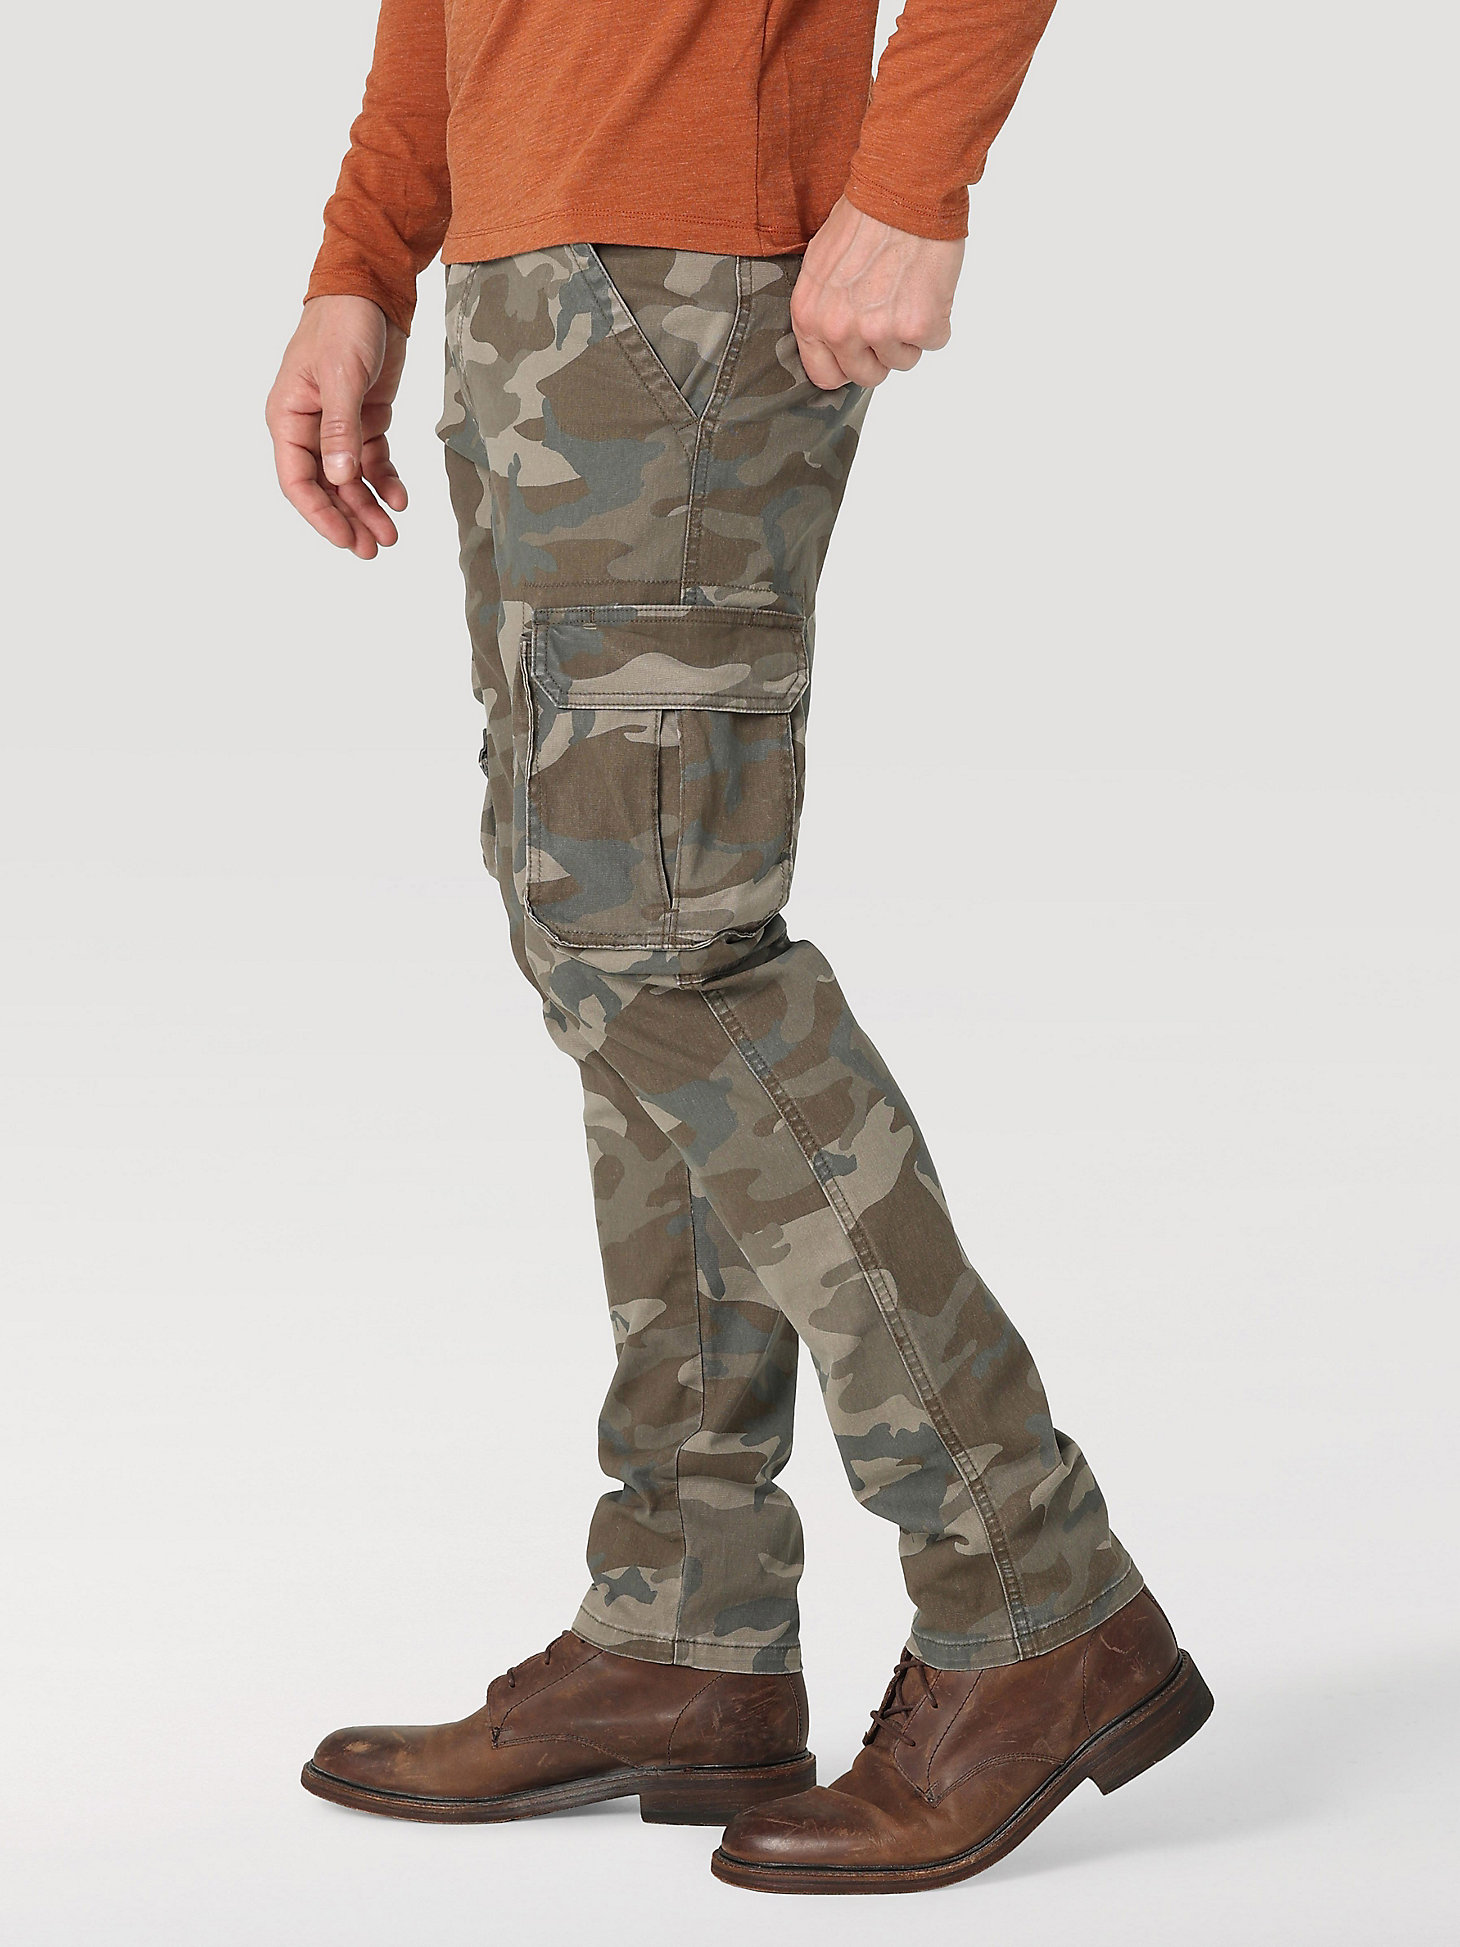 Men's Wrangler® Flex Tapered Cargo Pant in Brown Jungle Camo alternative view 8